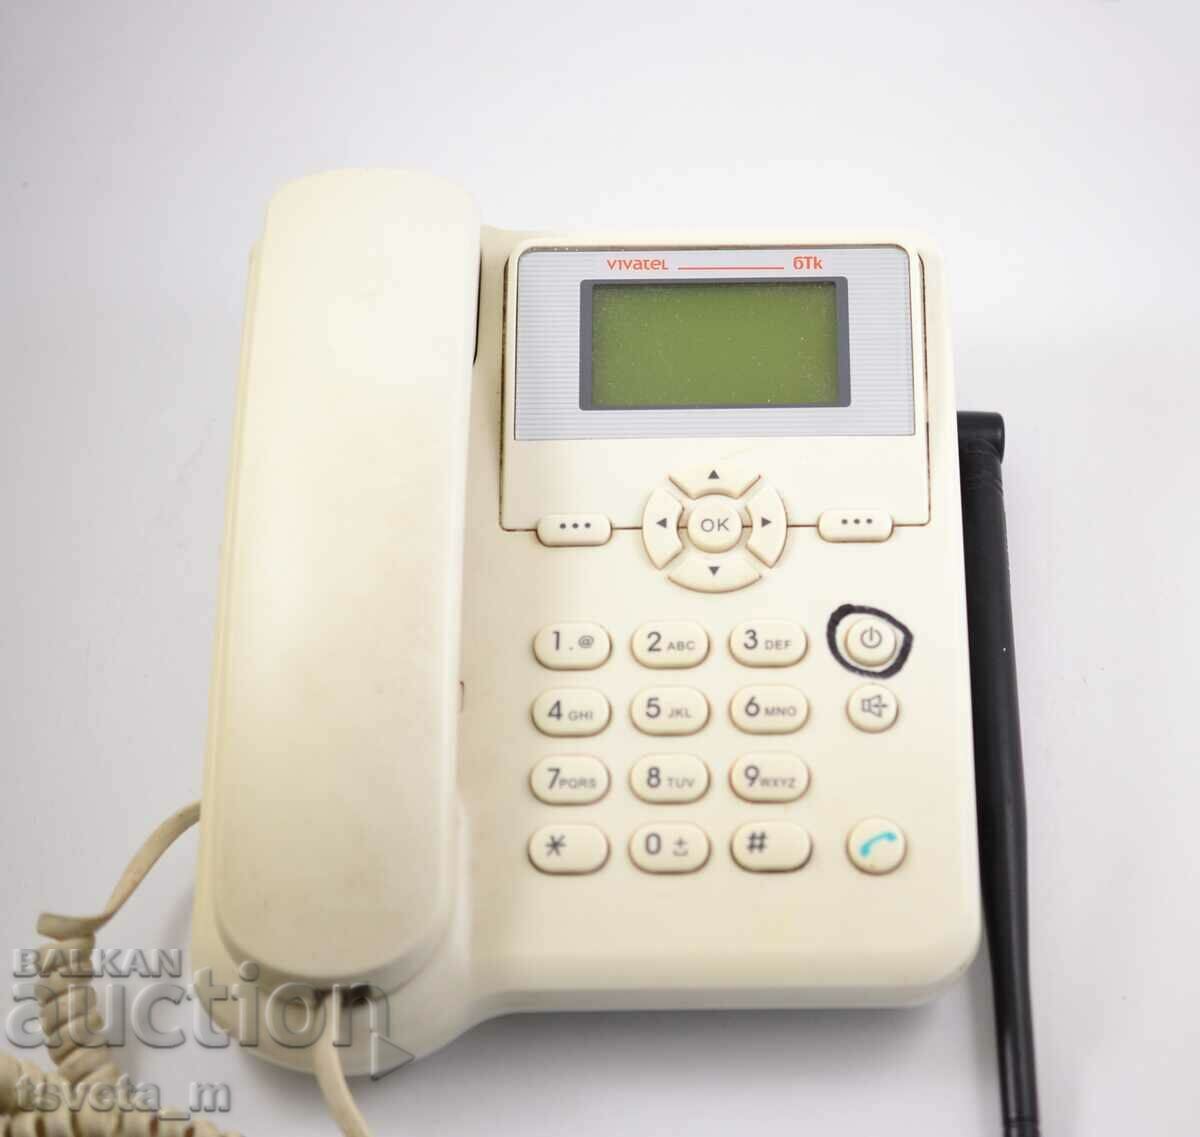 Wireless landline phone - Huawei